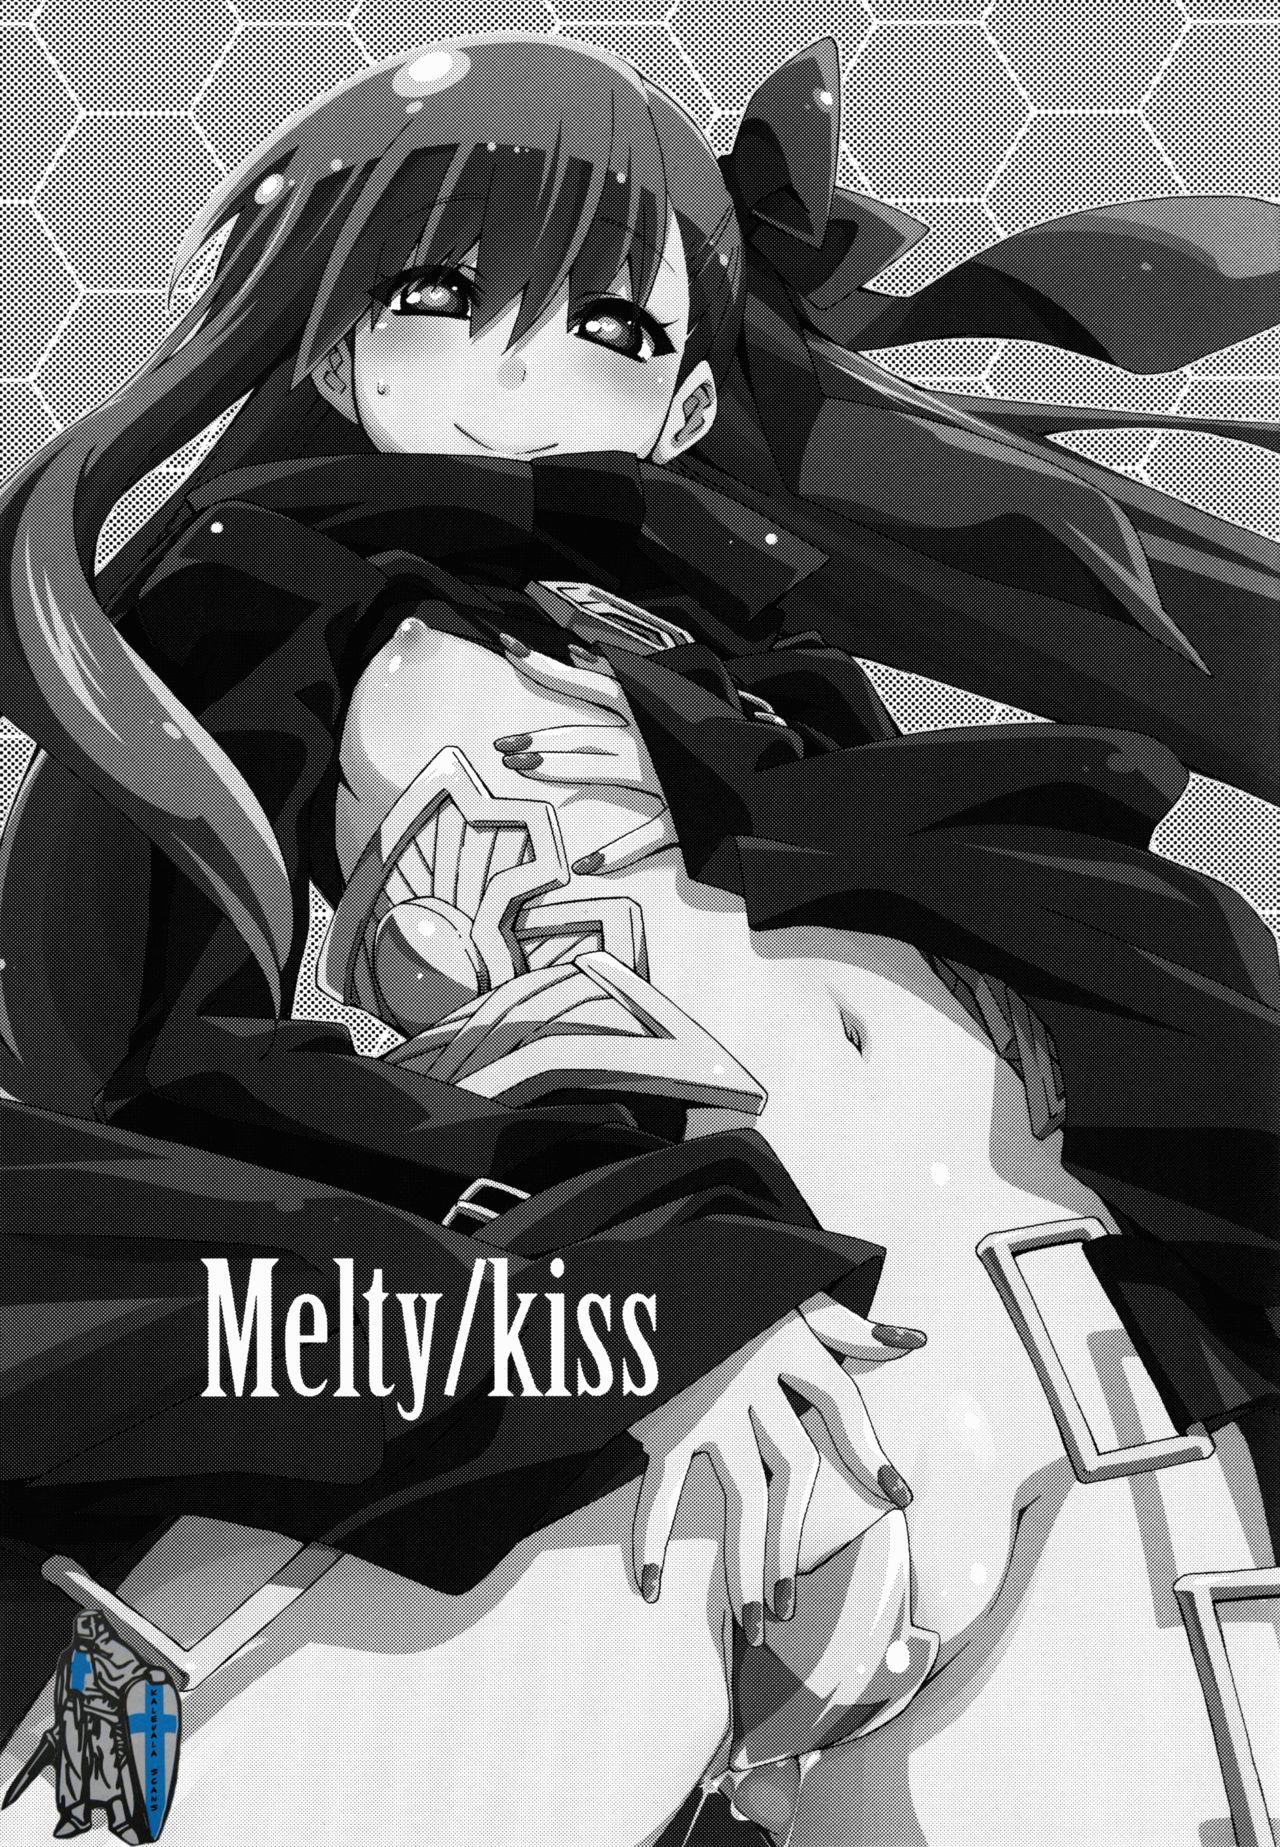 Melty/kiss 2